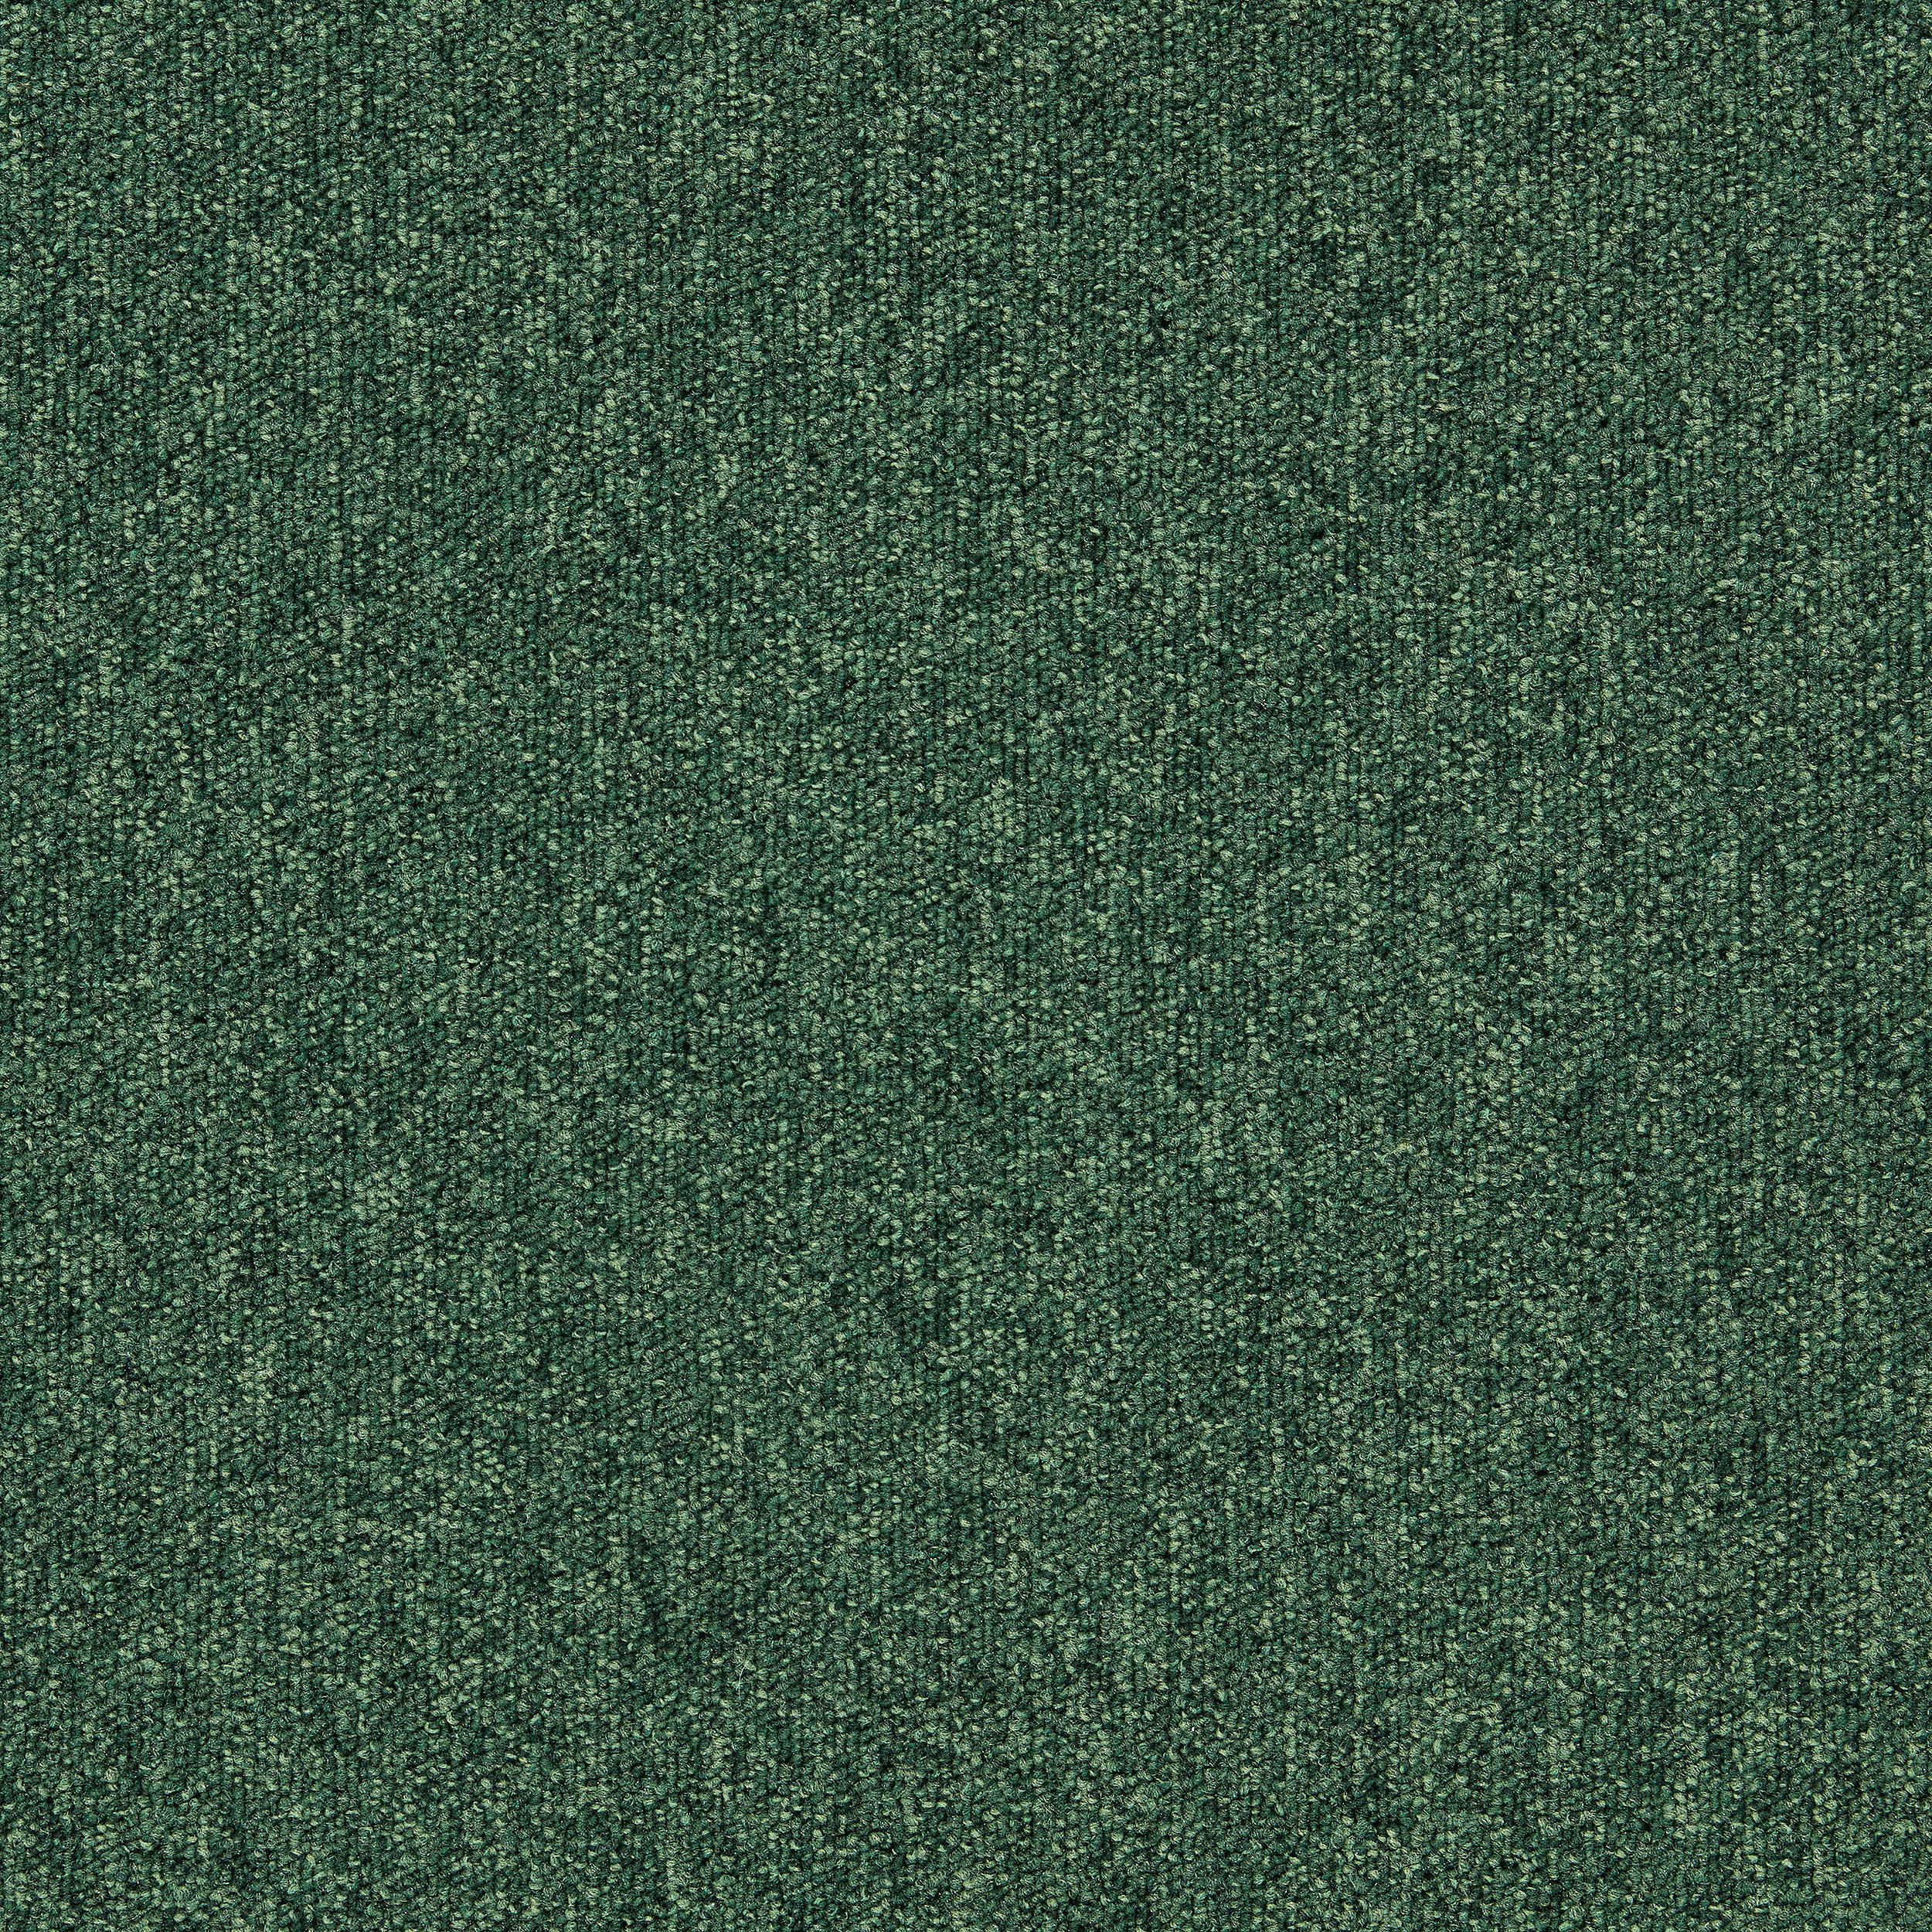 Heuga 727 Carpet Tile In Bottle Green número de imagen 16